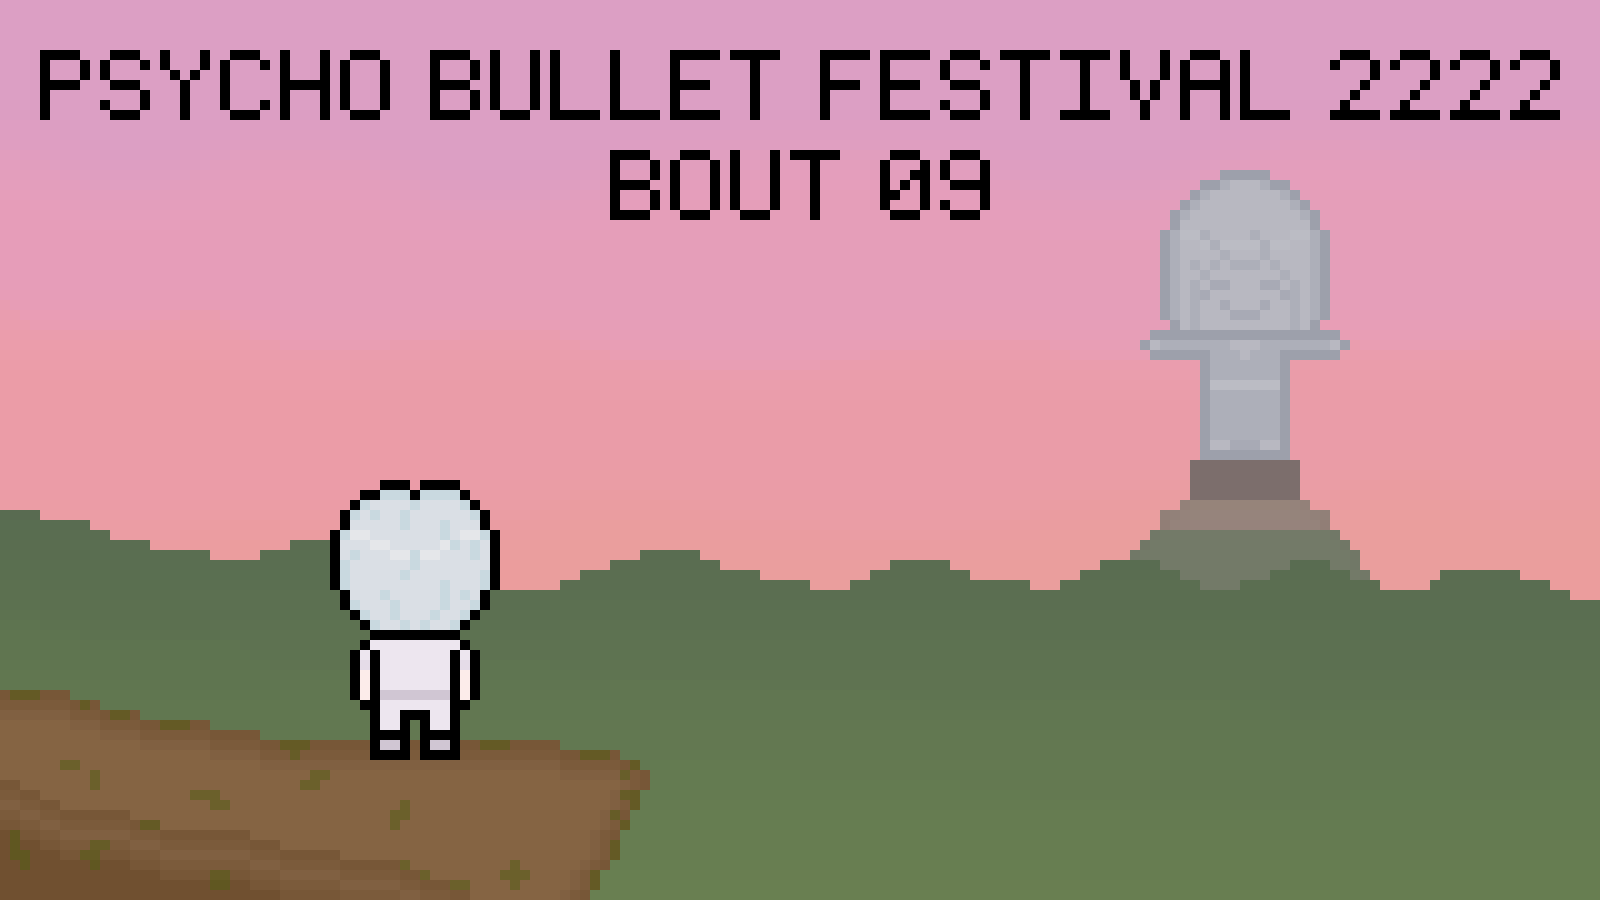 psycho-bullet-festival-2222-ch-09.png